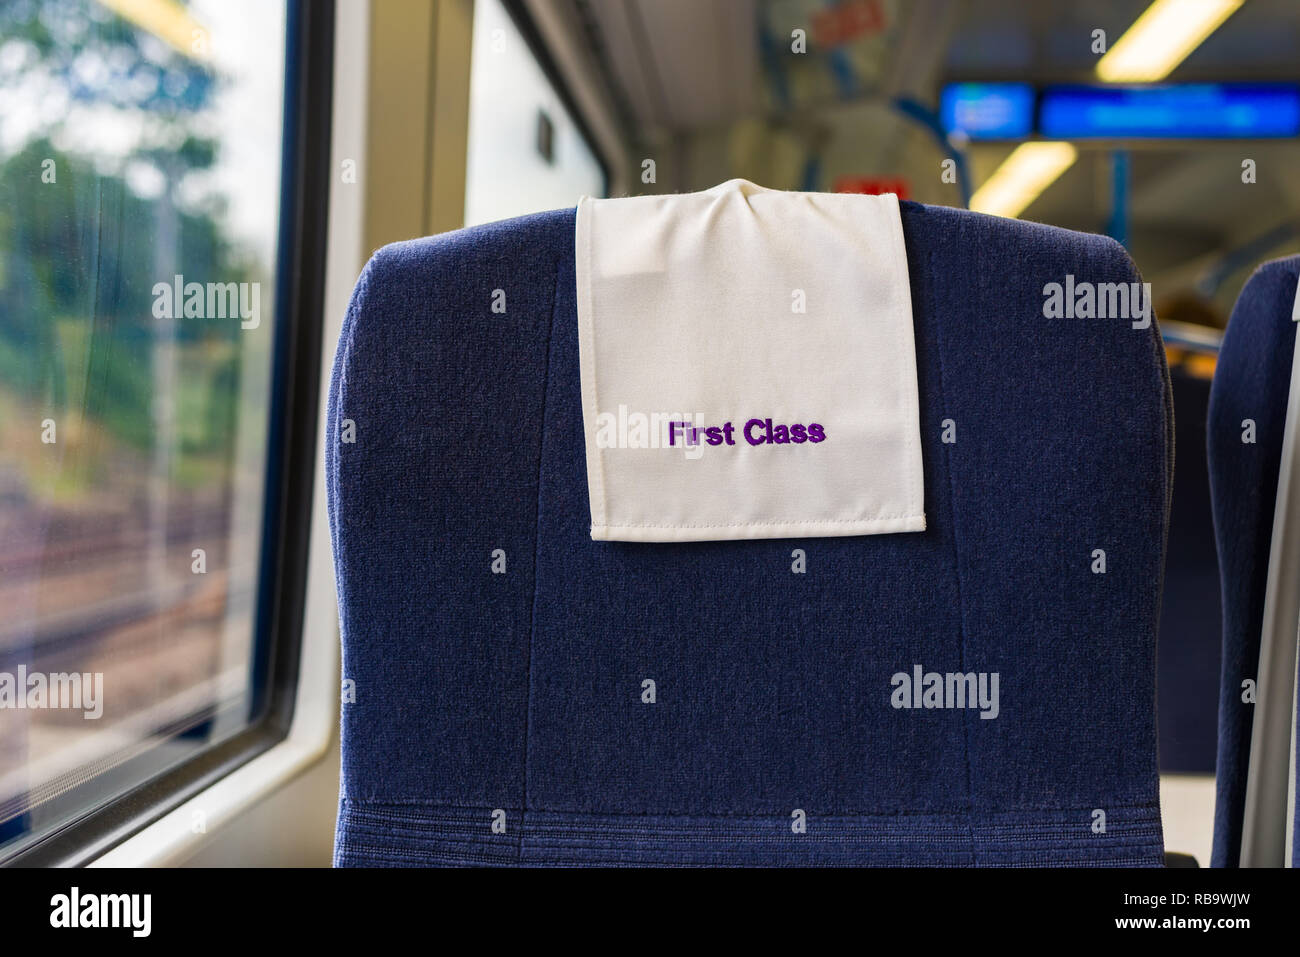 Ein Waggon Fensterplatz mit First Class sign on it, UK Stockfoto